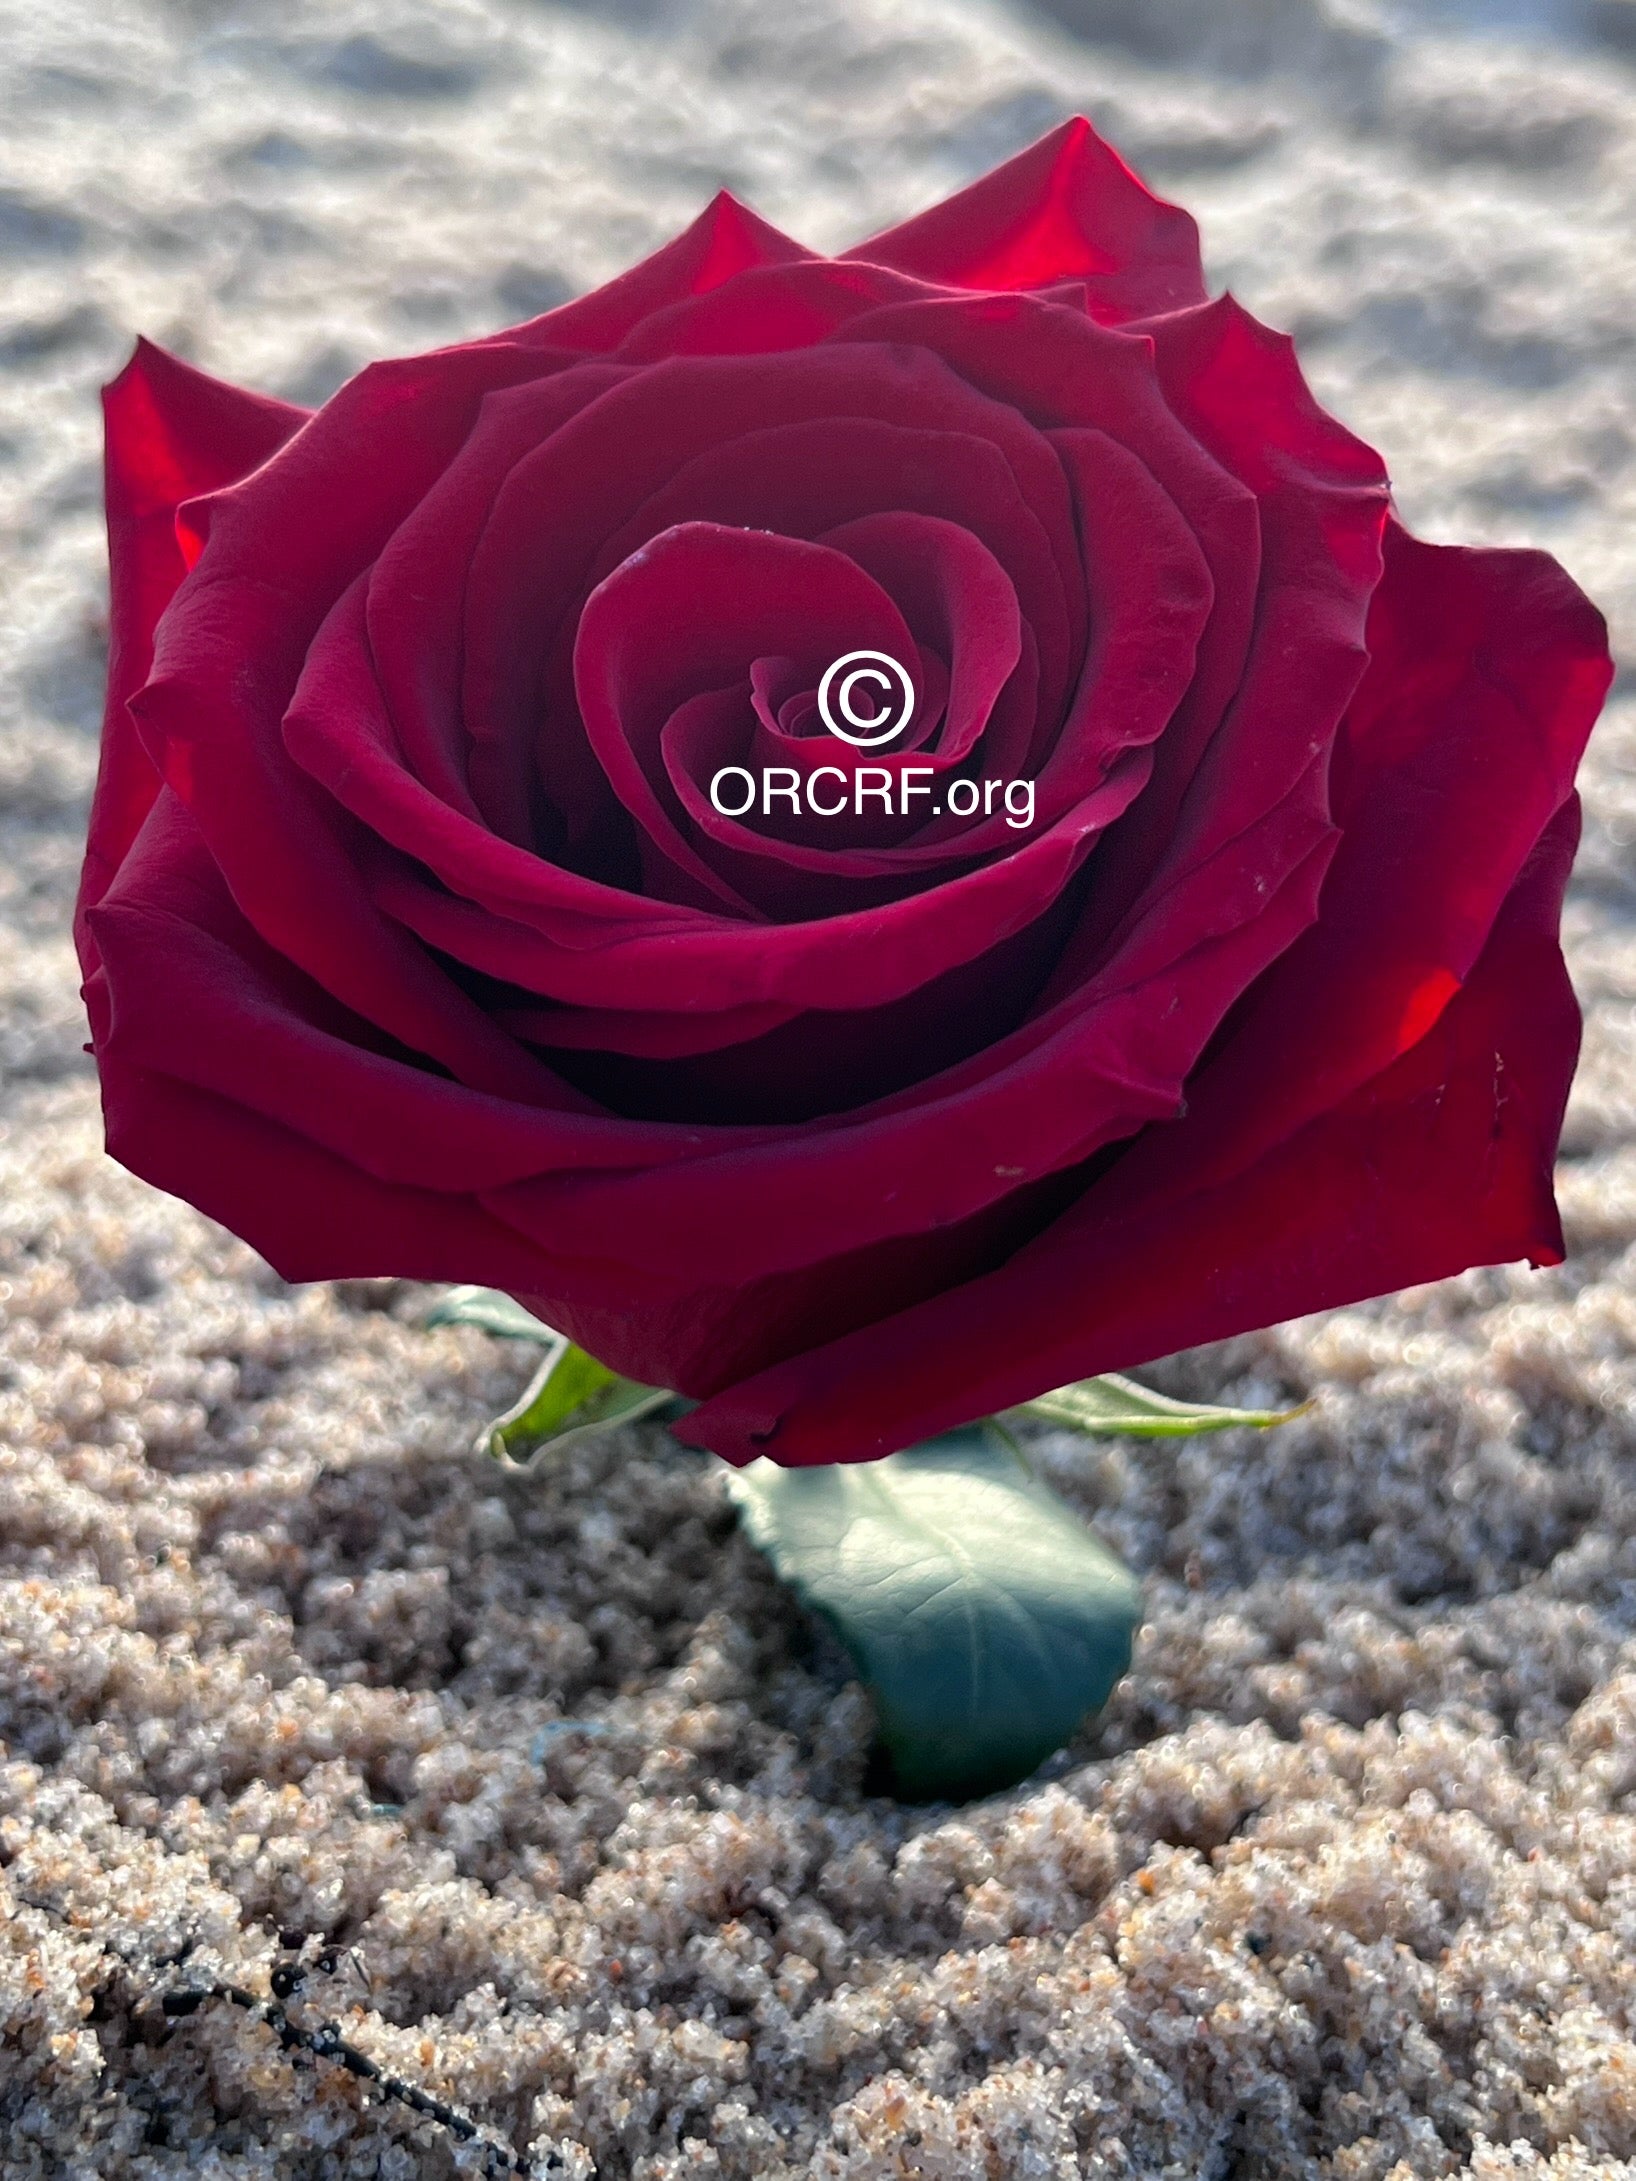 ORCRF ROSE / NFT Digital Art Image 1463 - Image Award Winning Photography by JARVIS Creative & Media Studios